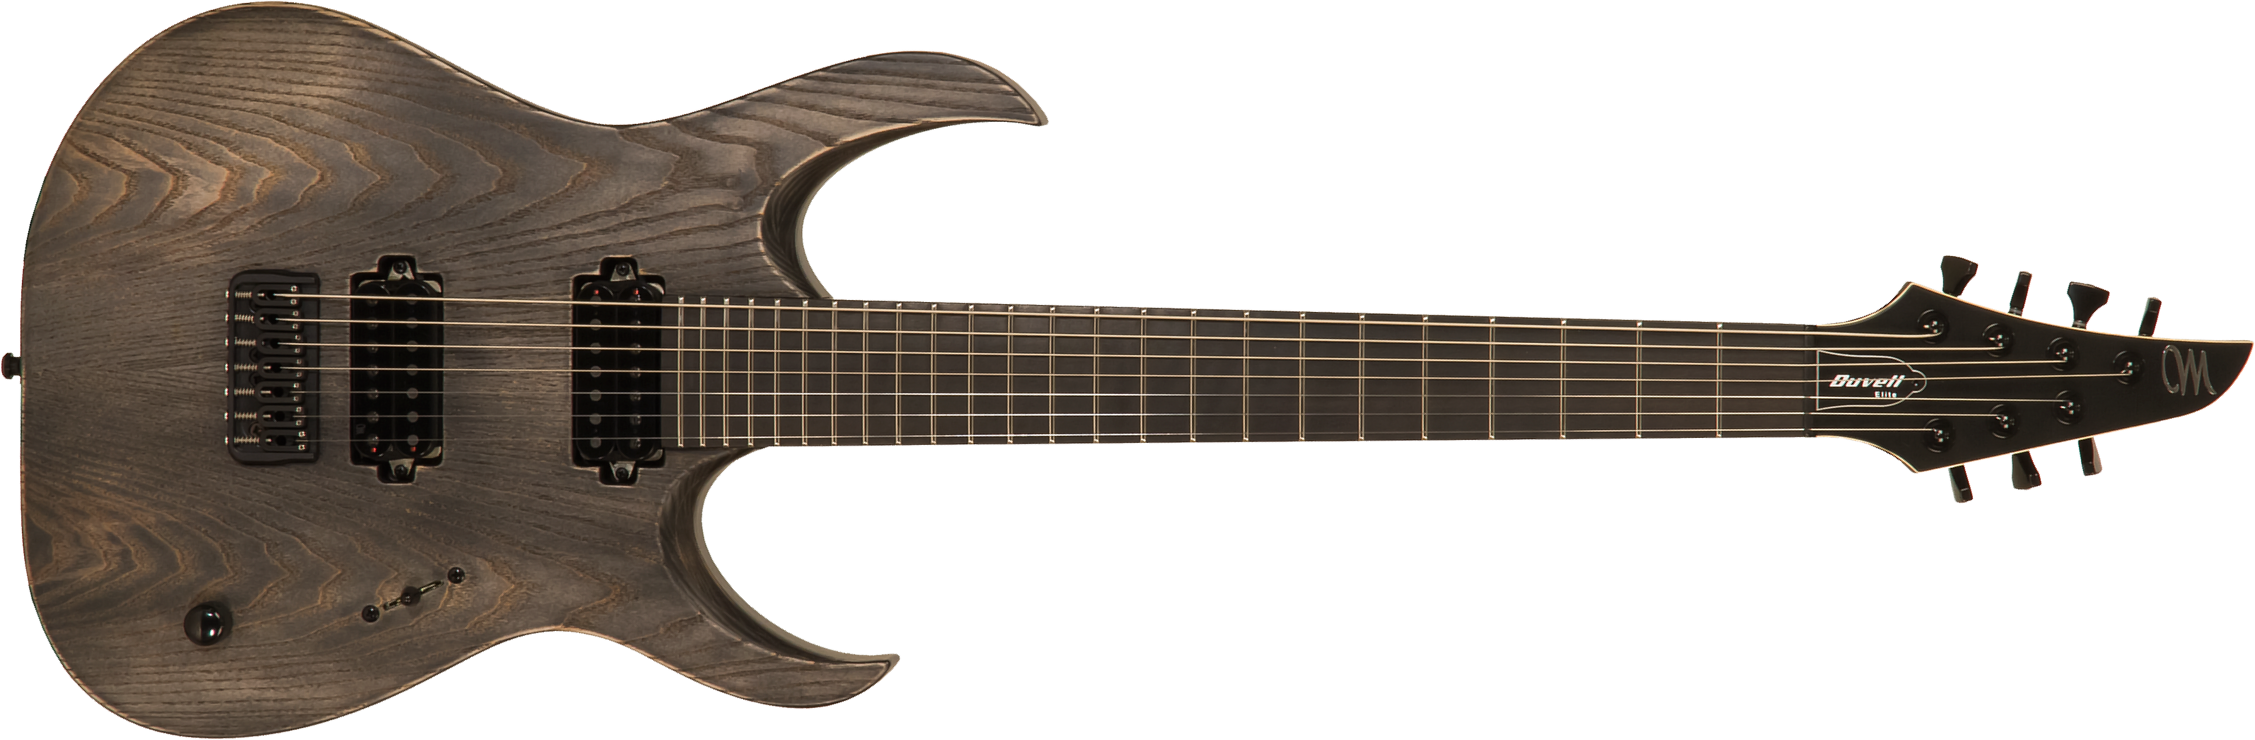 Mayones Guitars Duvell Elite Gothic 7 40th Anniversary 2h Tko Eb #df2205923 - Antique Black Satin - 7 string electric guitar - Main picture